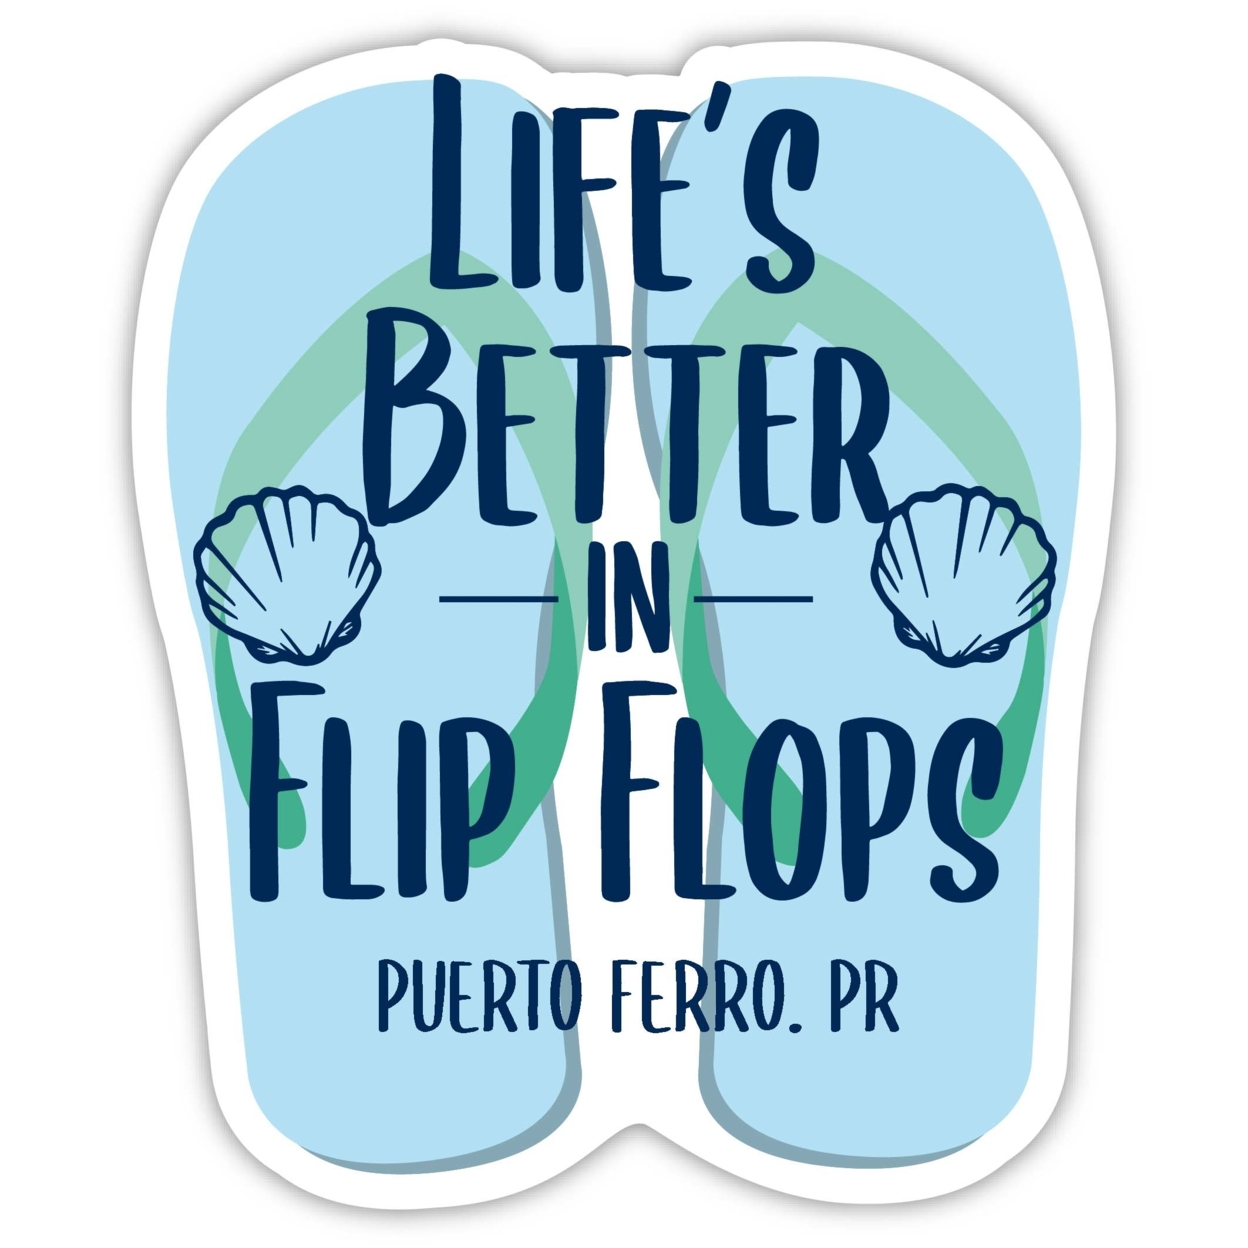 Puerto Ferro Puerto Rico Souvenir 4 Inch Vinyl Decal Sticker Flip Flop Design